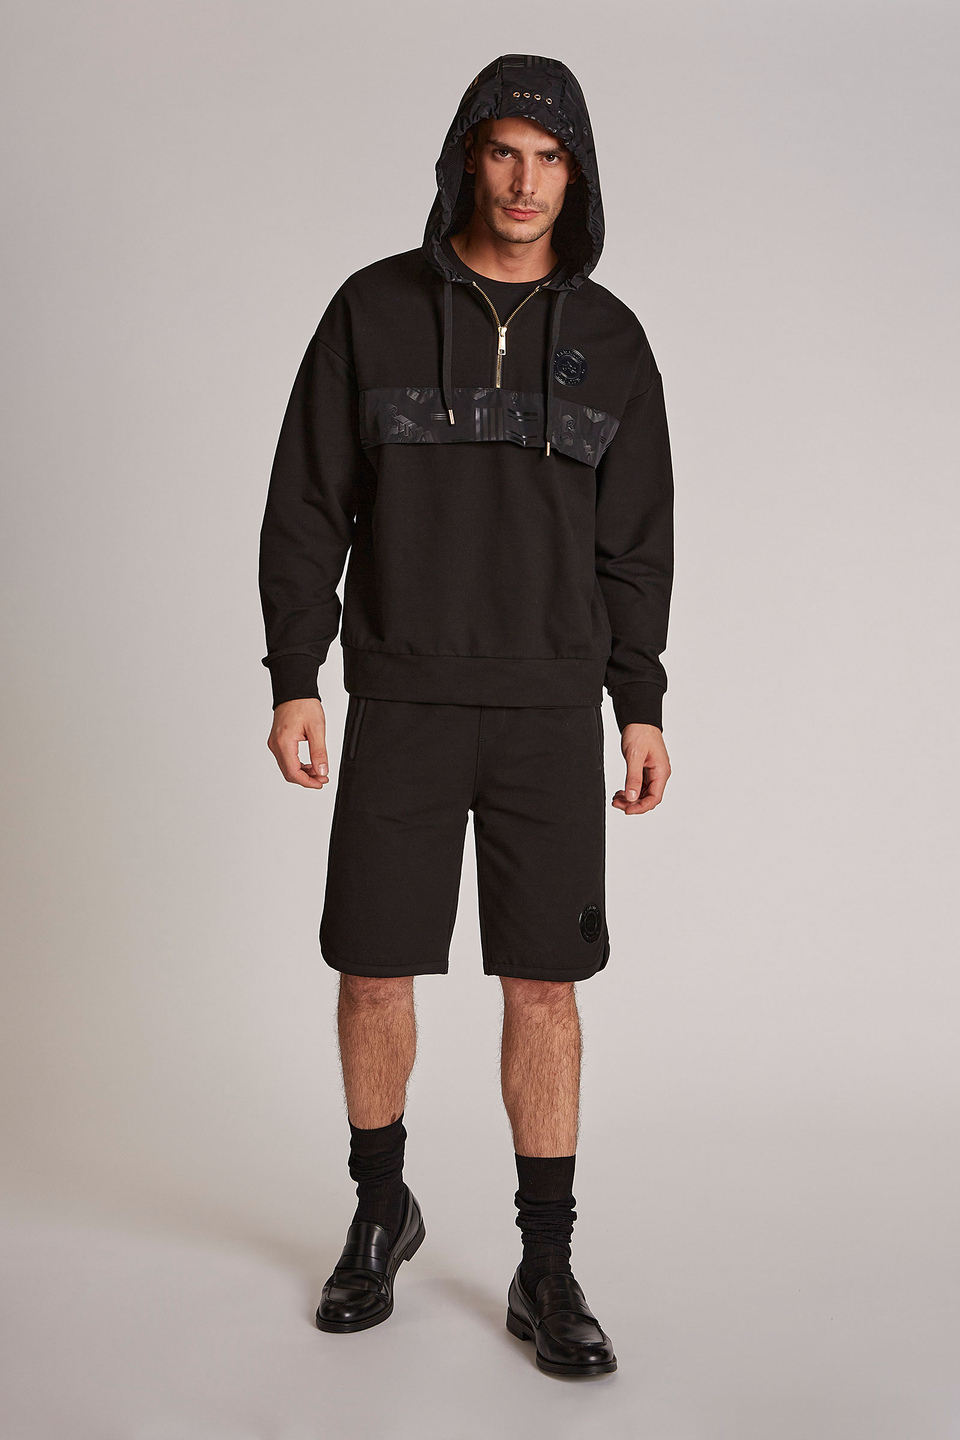 Herren-Sweatshirt aus Baumwollmix mit Reißverschluss, oversized Modell | La Martina - Official Online Shop